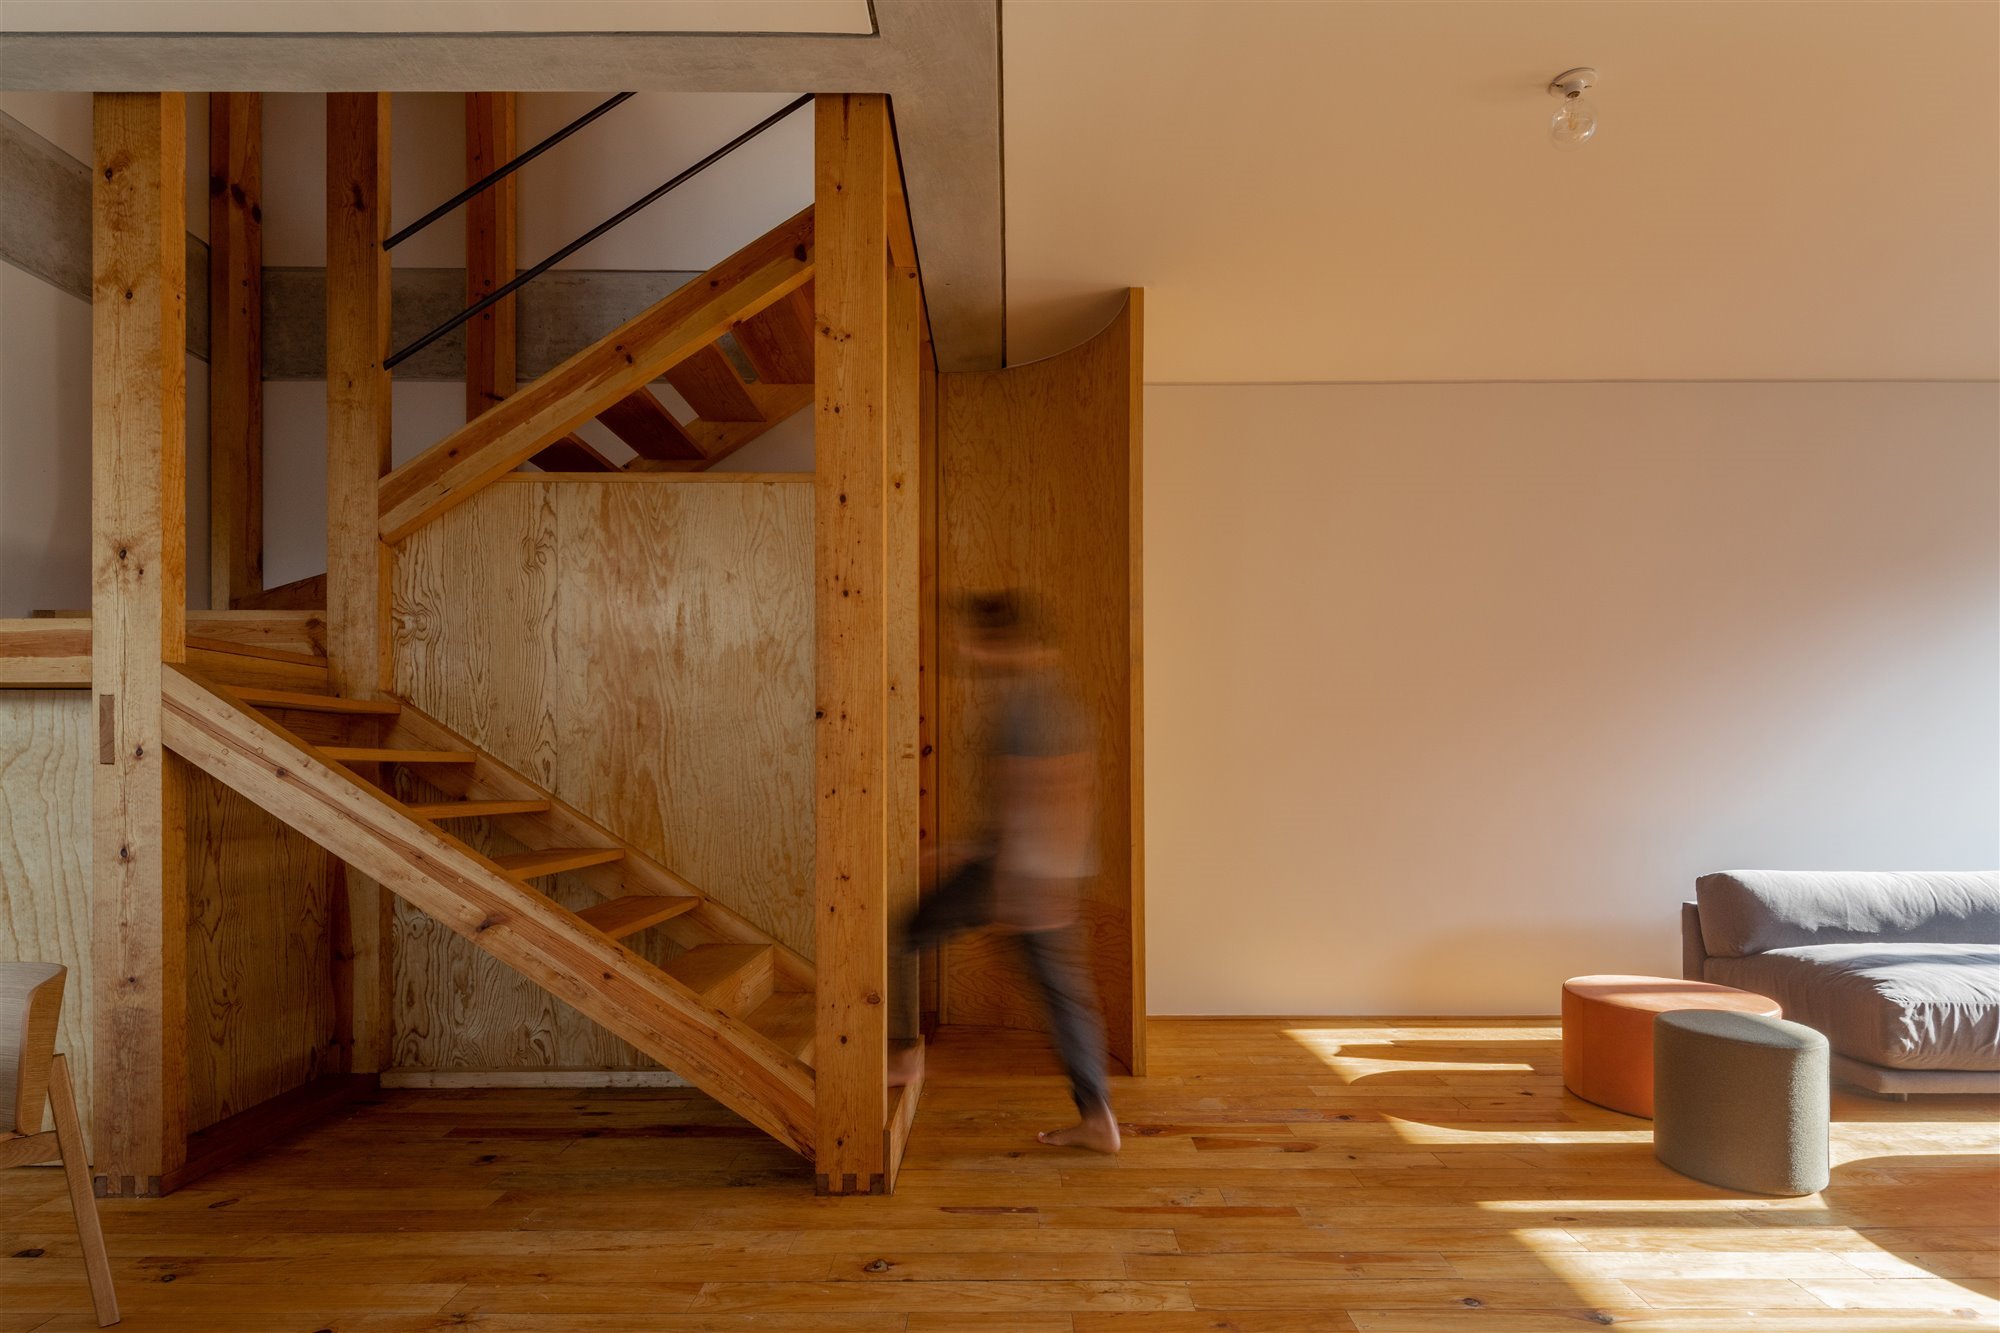 Apartamentos moderns en Mexico de lujo con interiores de madera escaleras de acceso